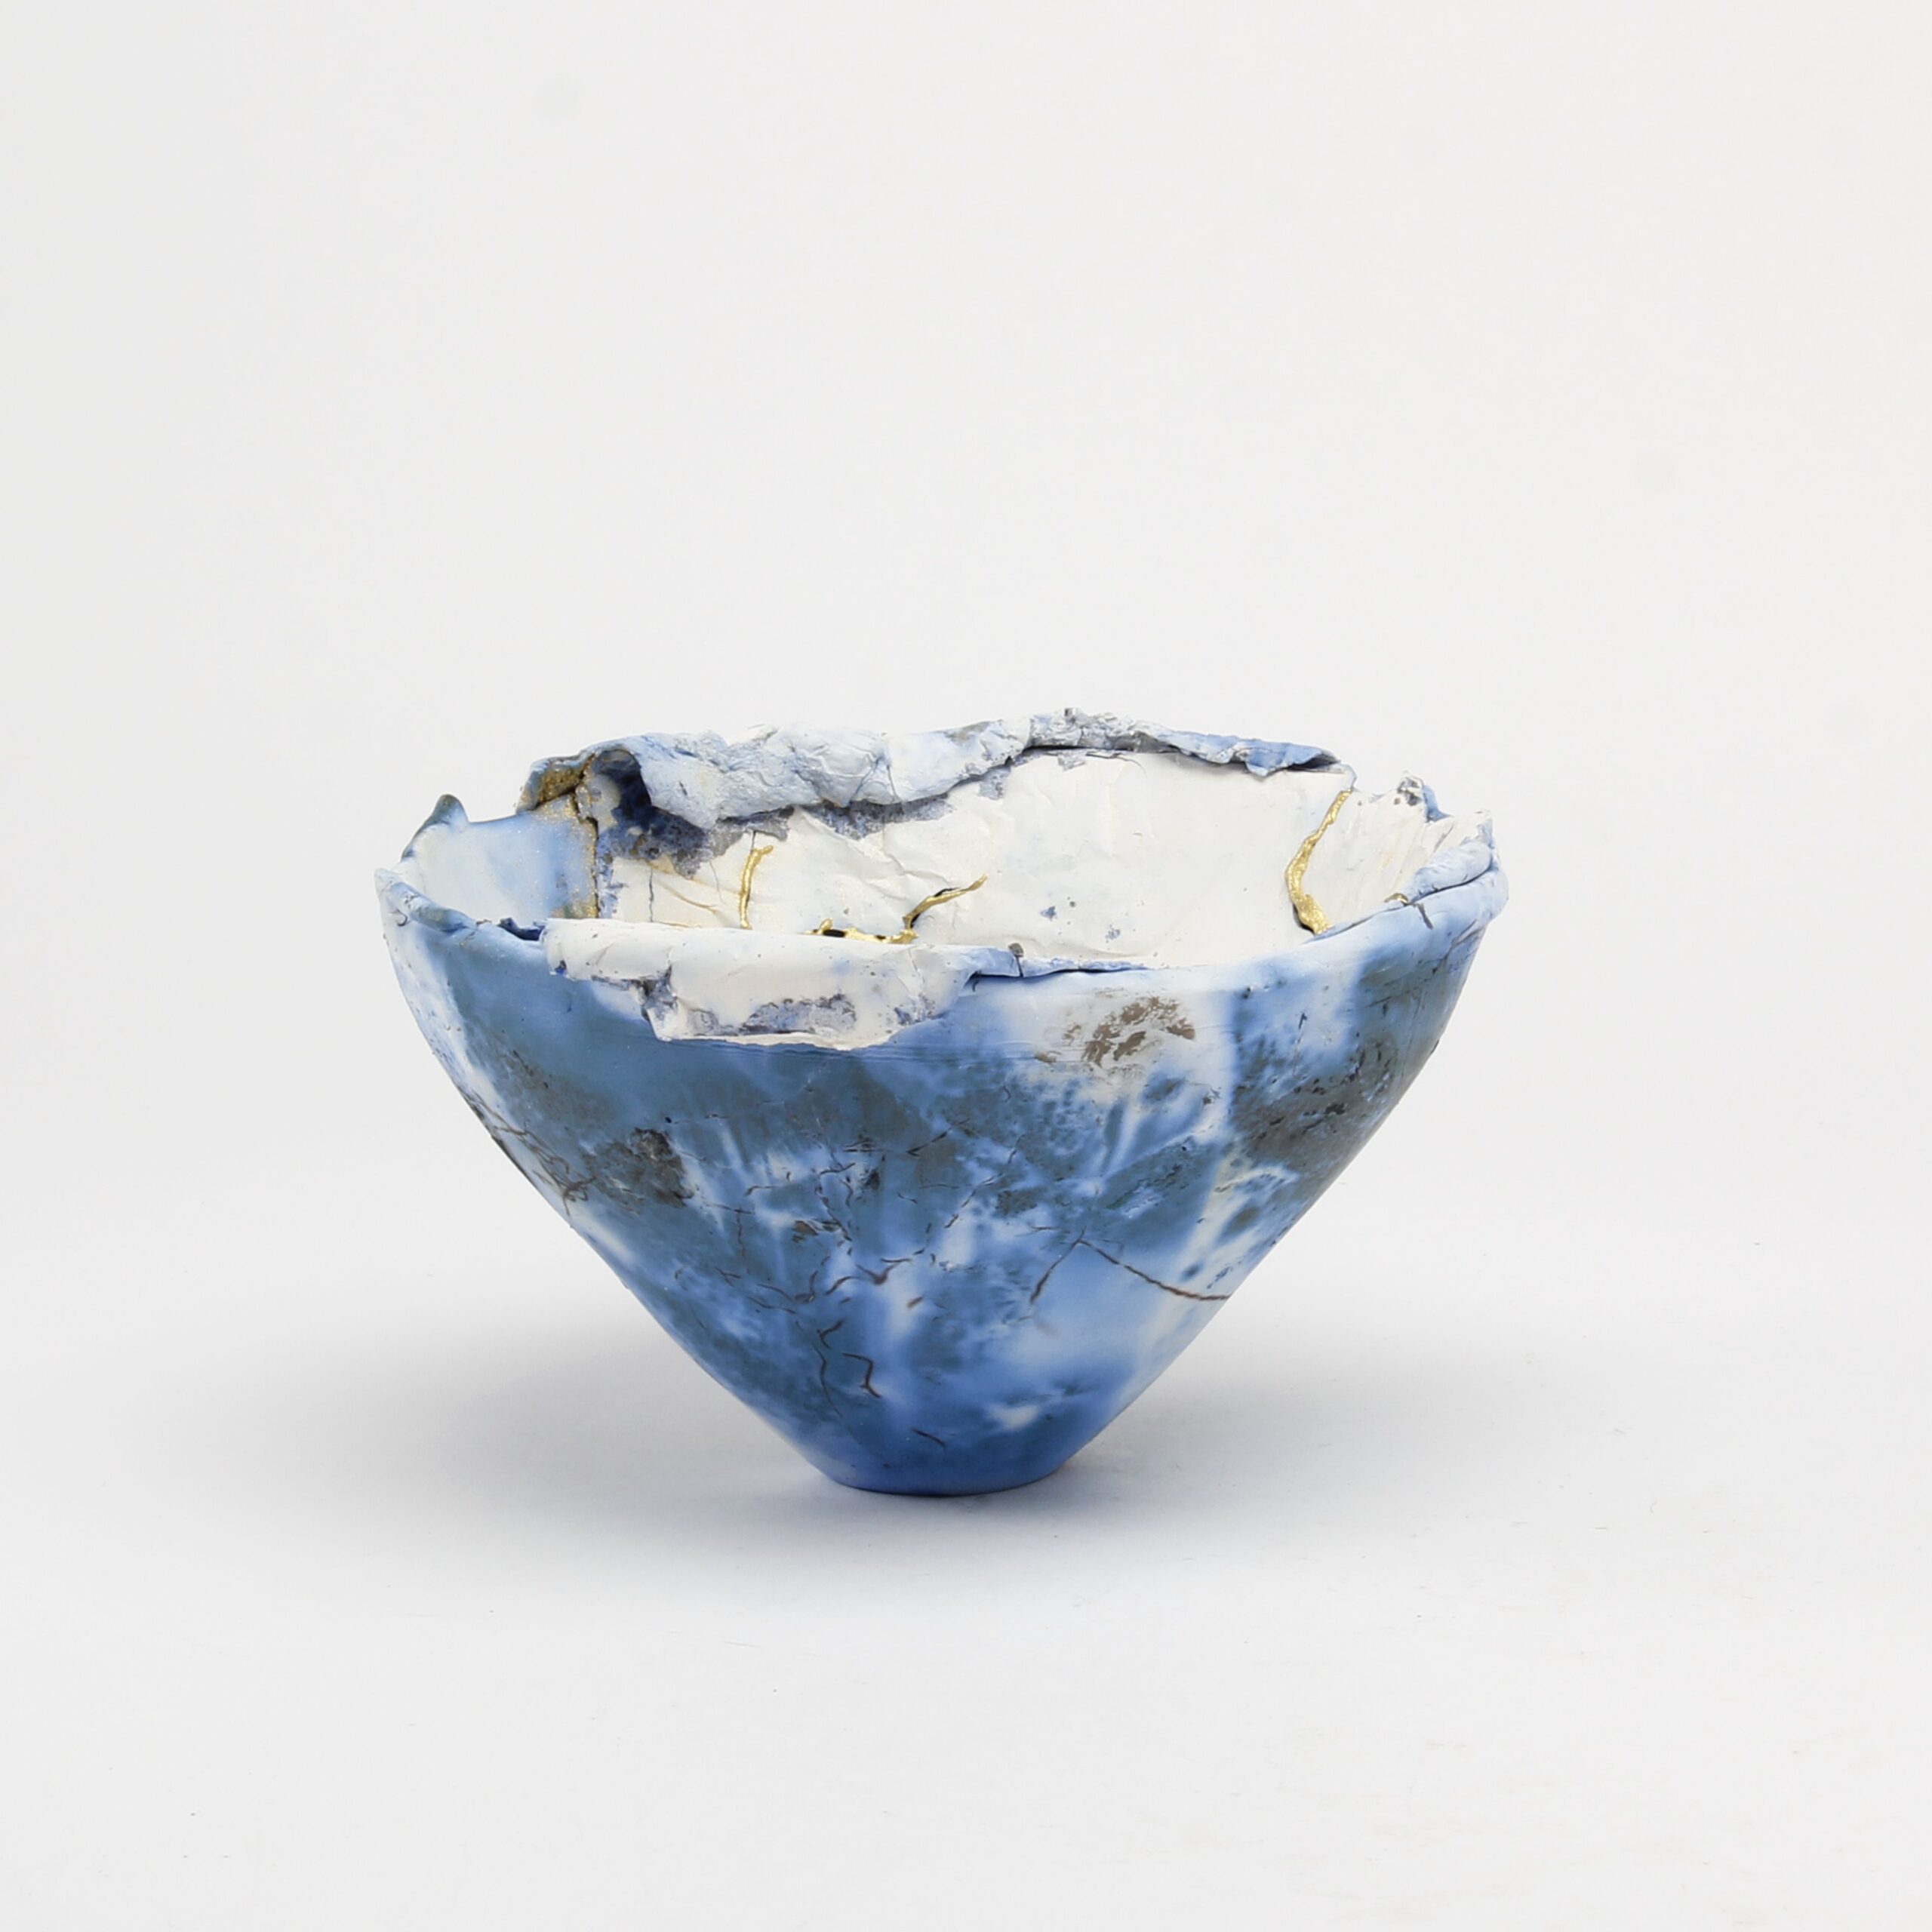 Alison Brannen: Medium Sculptural Bowl Product Image 2 of 3